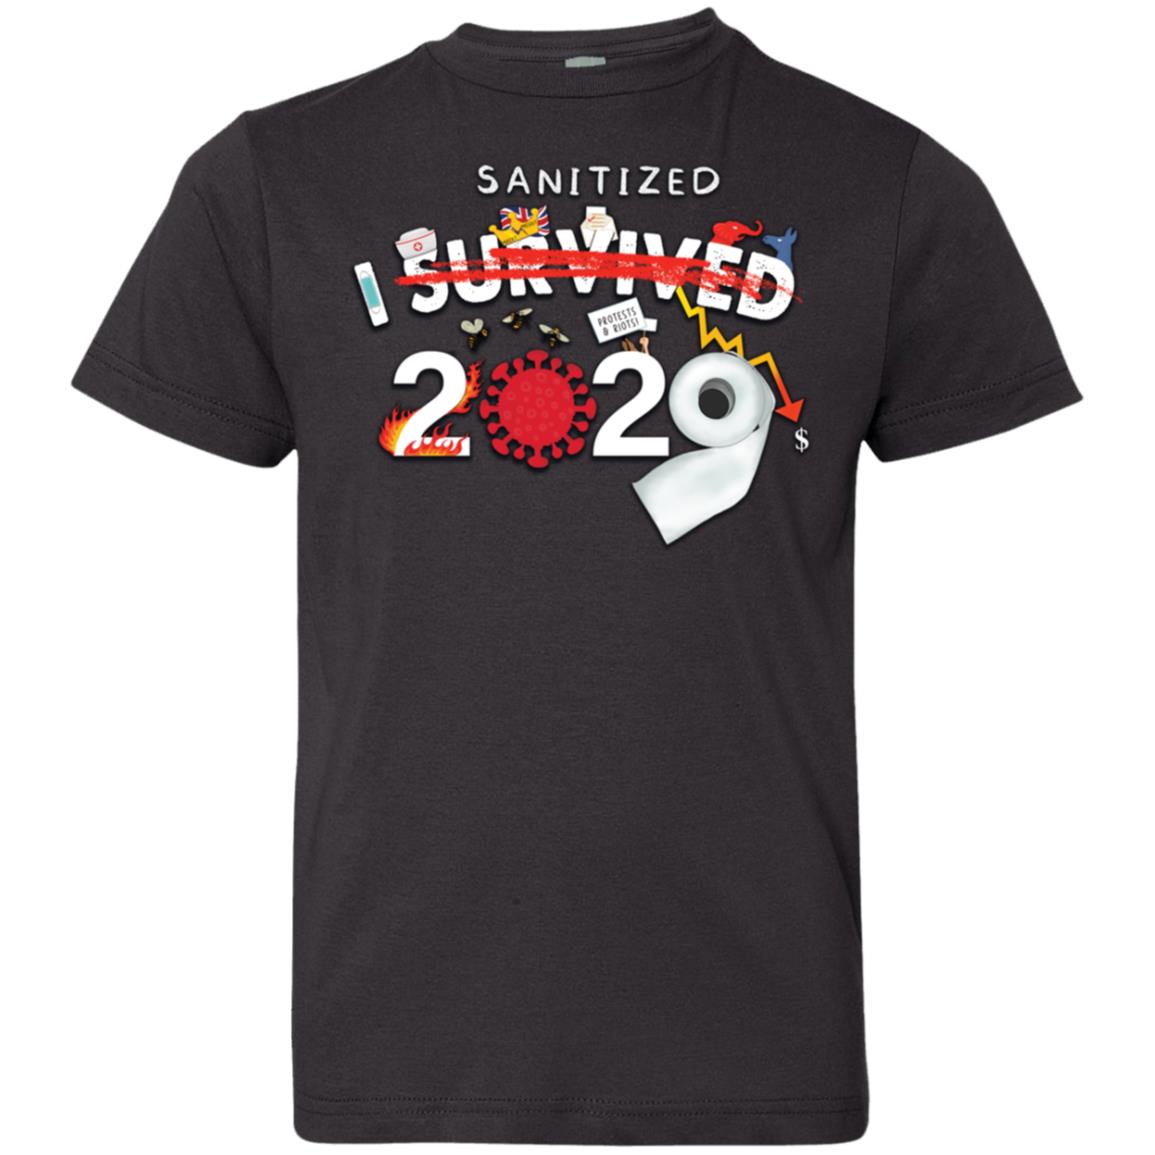 I Sanitized 2020 - Youth Jersey T-Shirt